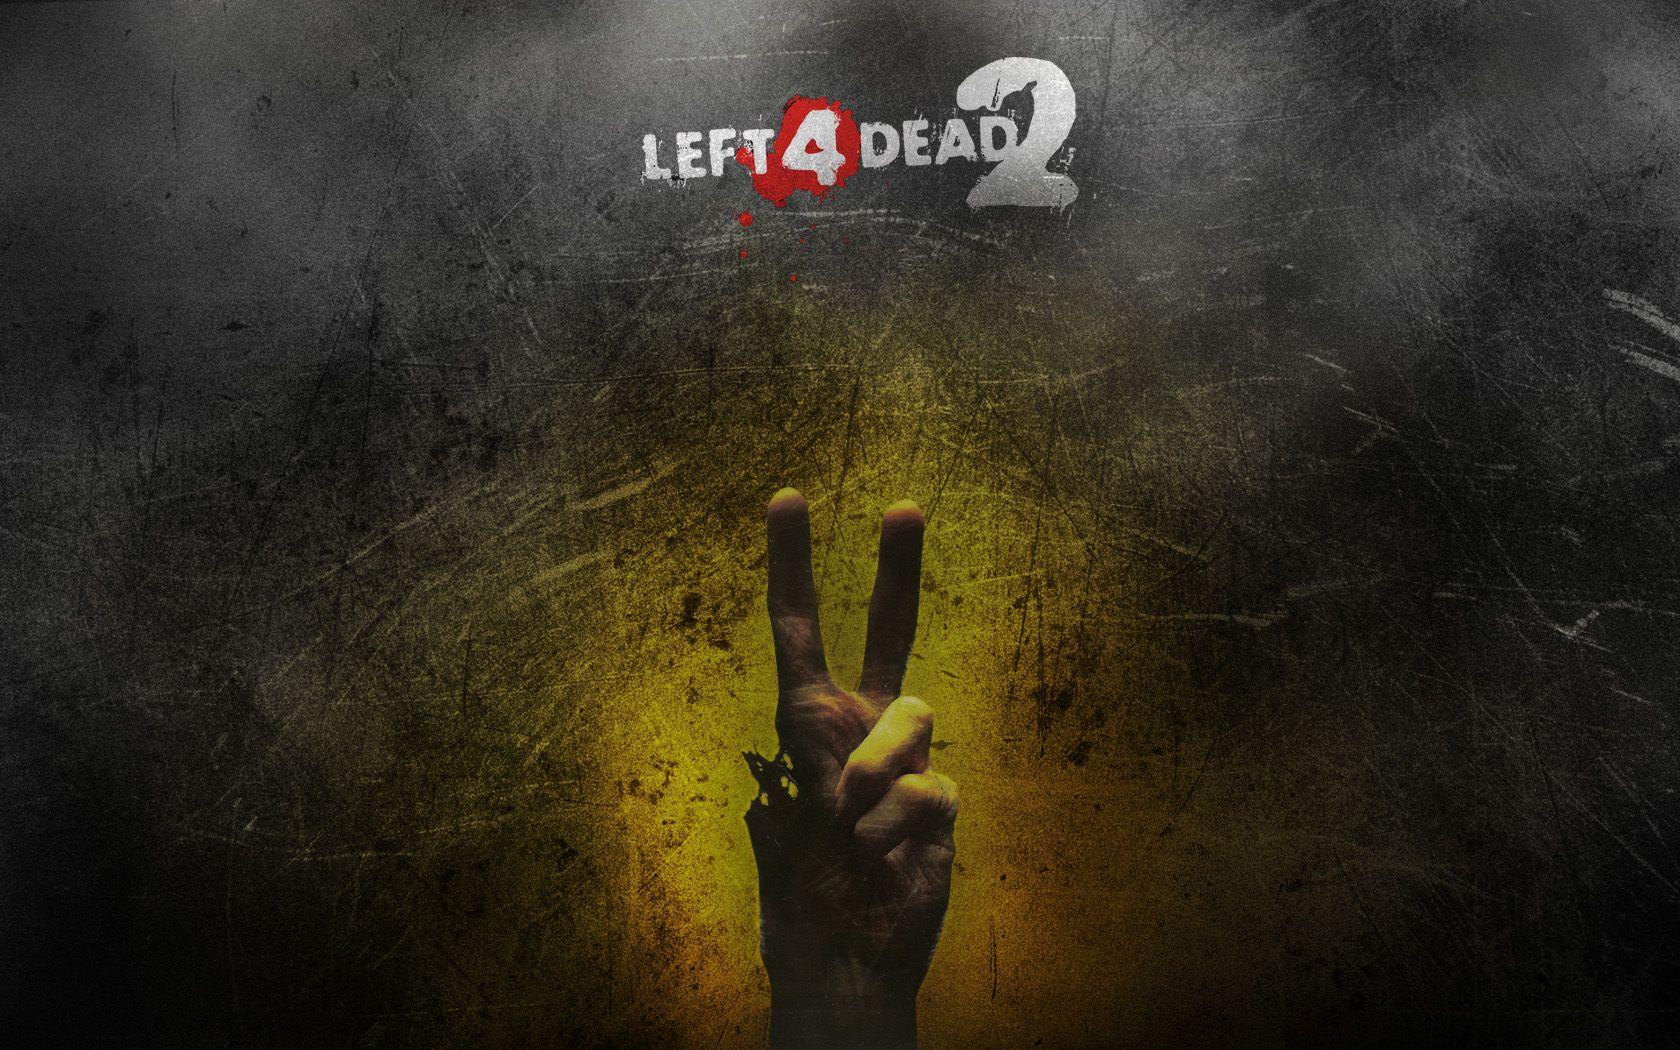 HD Quality Left 4 Dead 2 Image, Left 4 Dead 2 Wallpaper HD Base